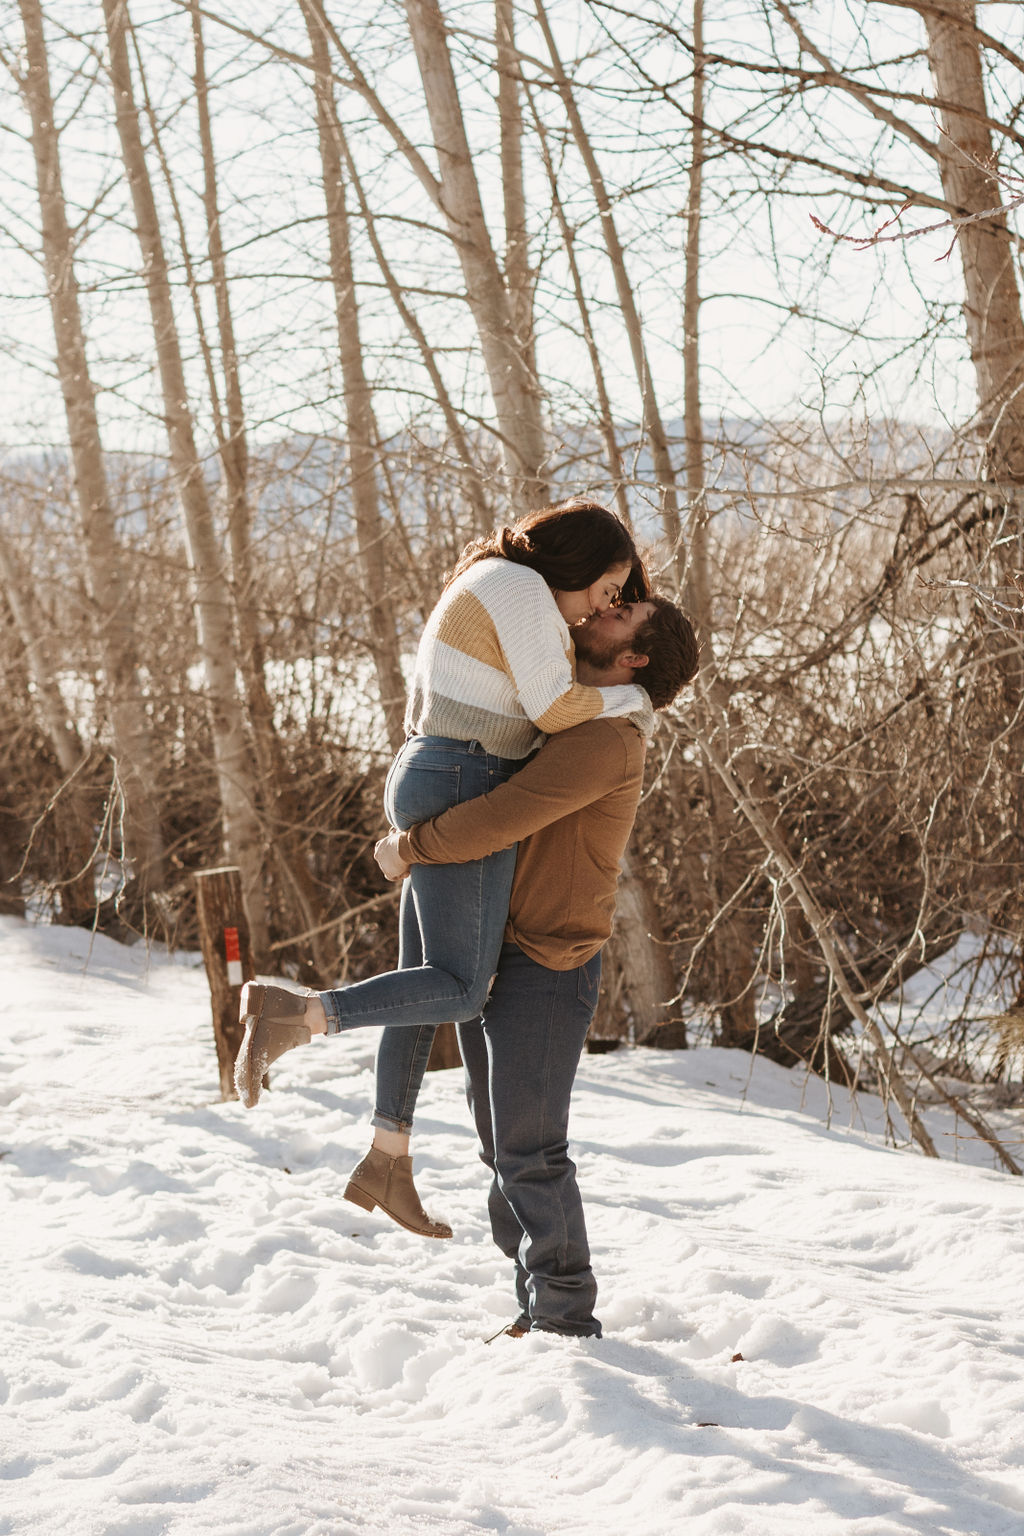 Snowy Winter Engagement Photos | Antonia & Brian